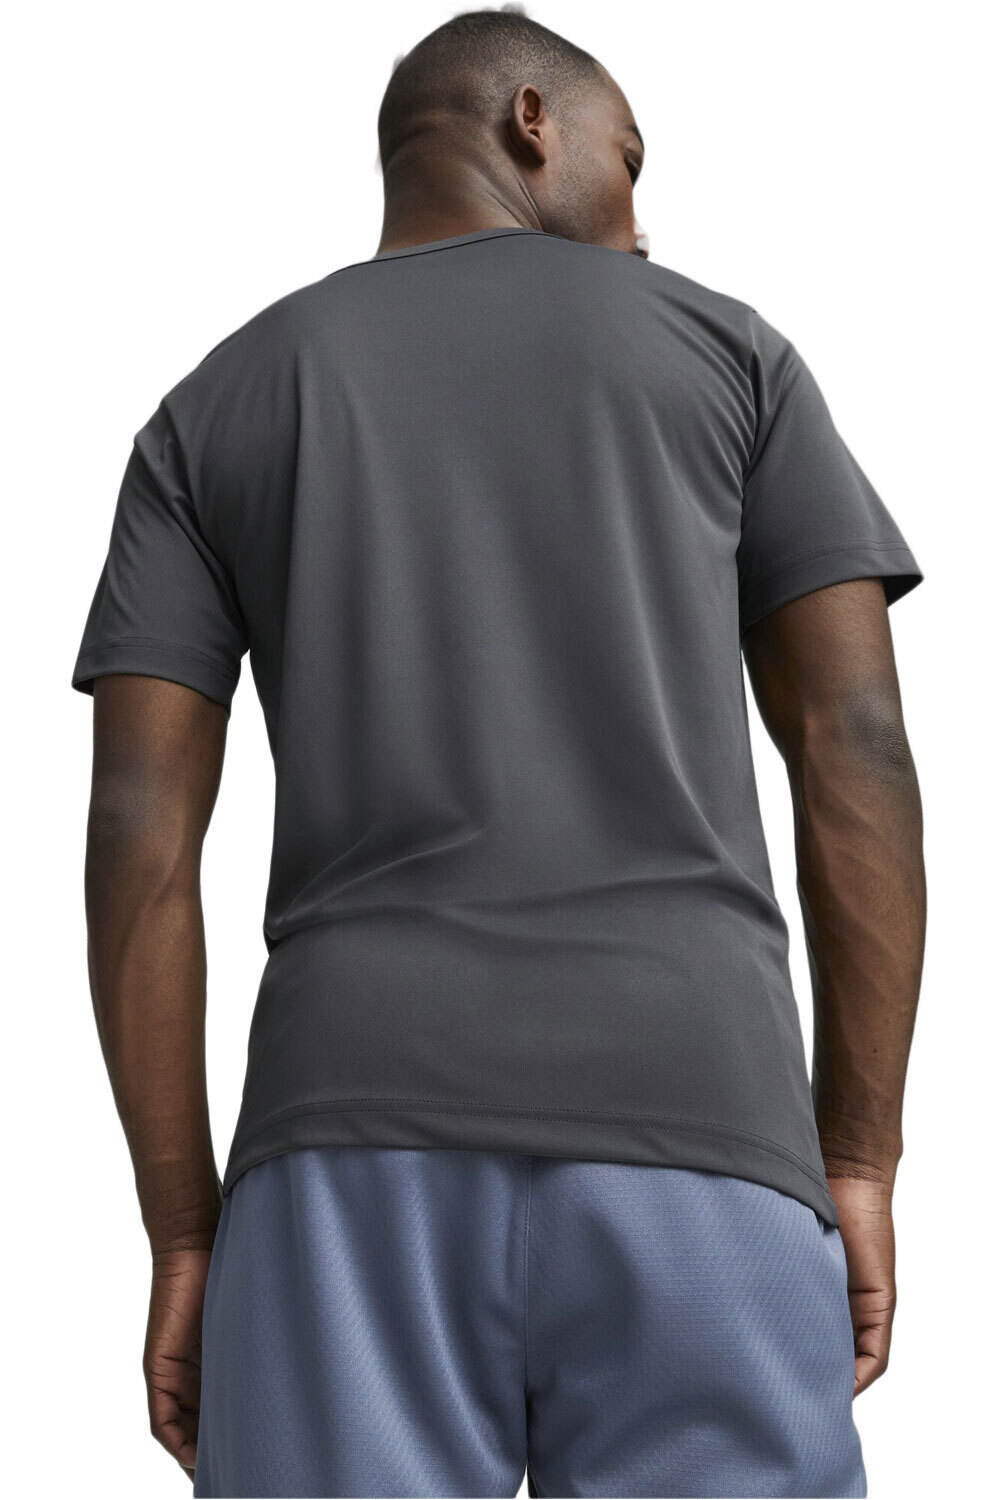 Puma camisetas fútbol manga corta individualRISE Graphic Jersey vista trasera